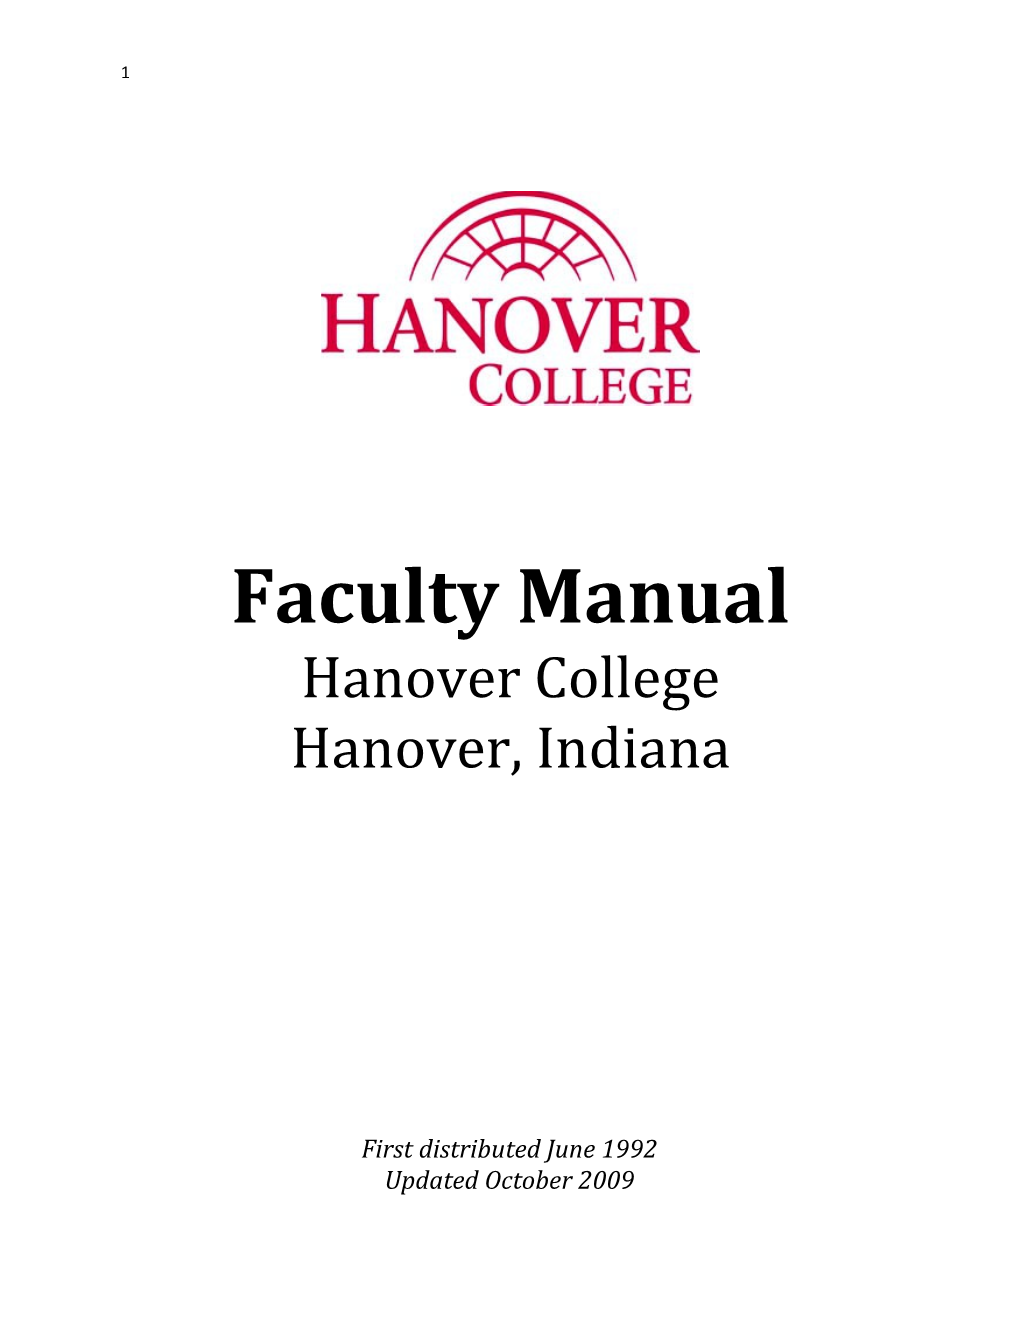 Faculty Manual Hanover College Hanover, Indiana